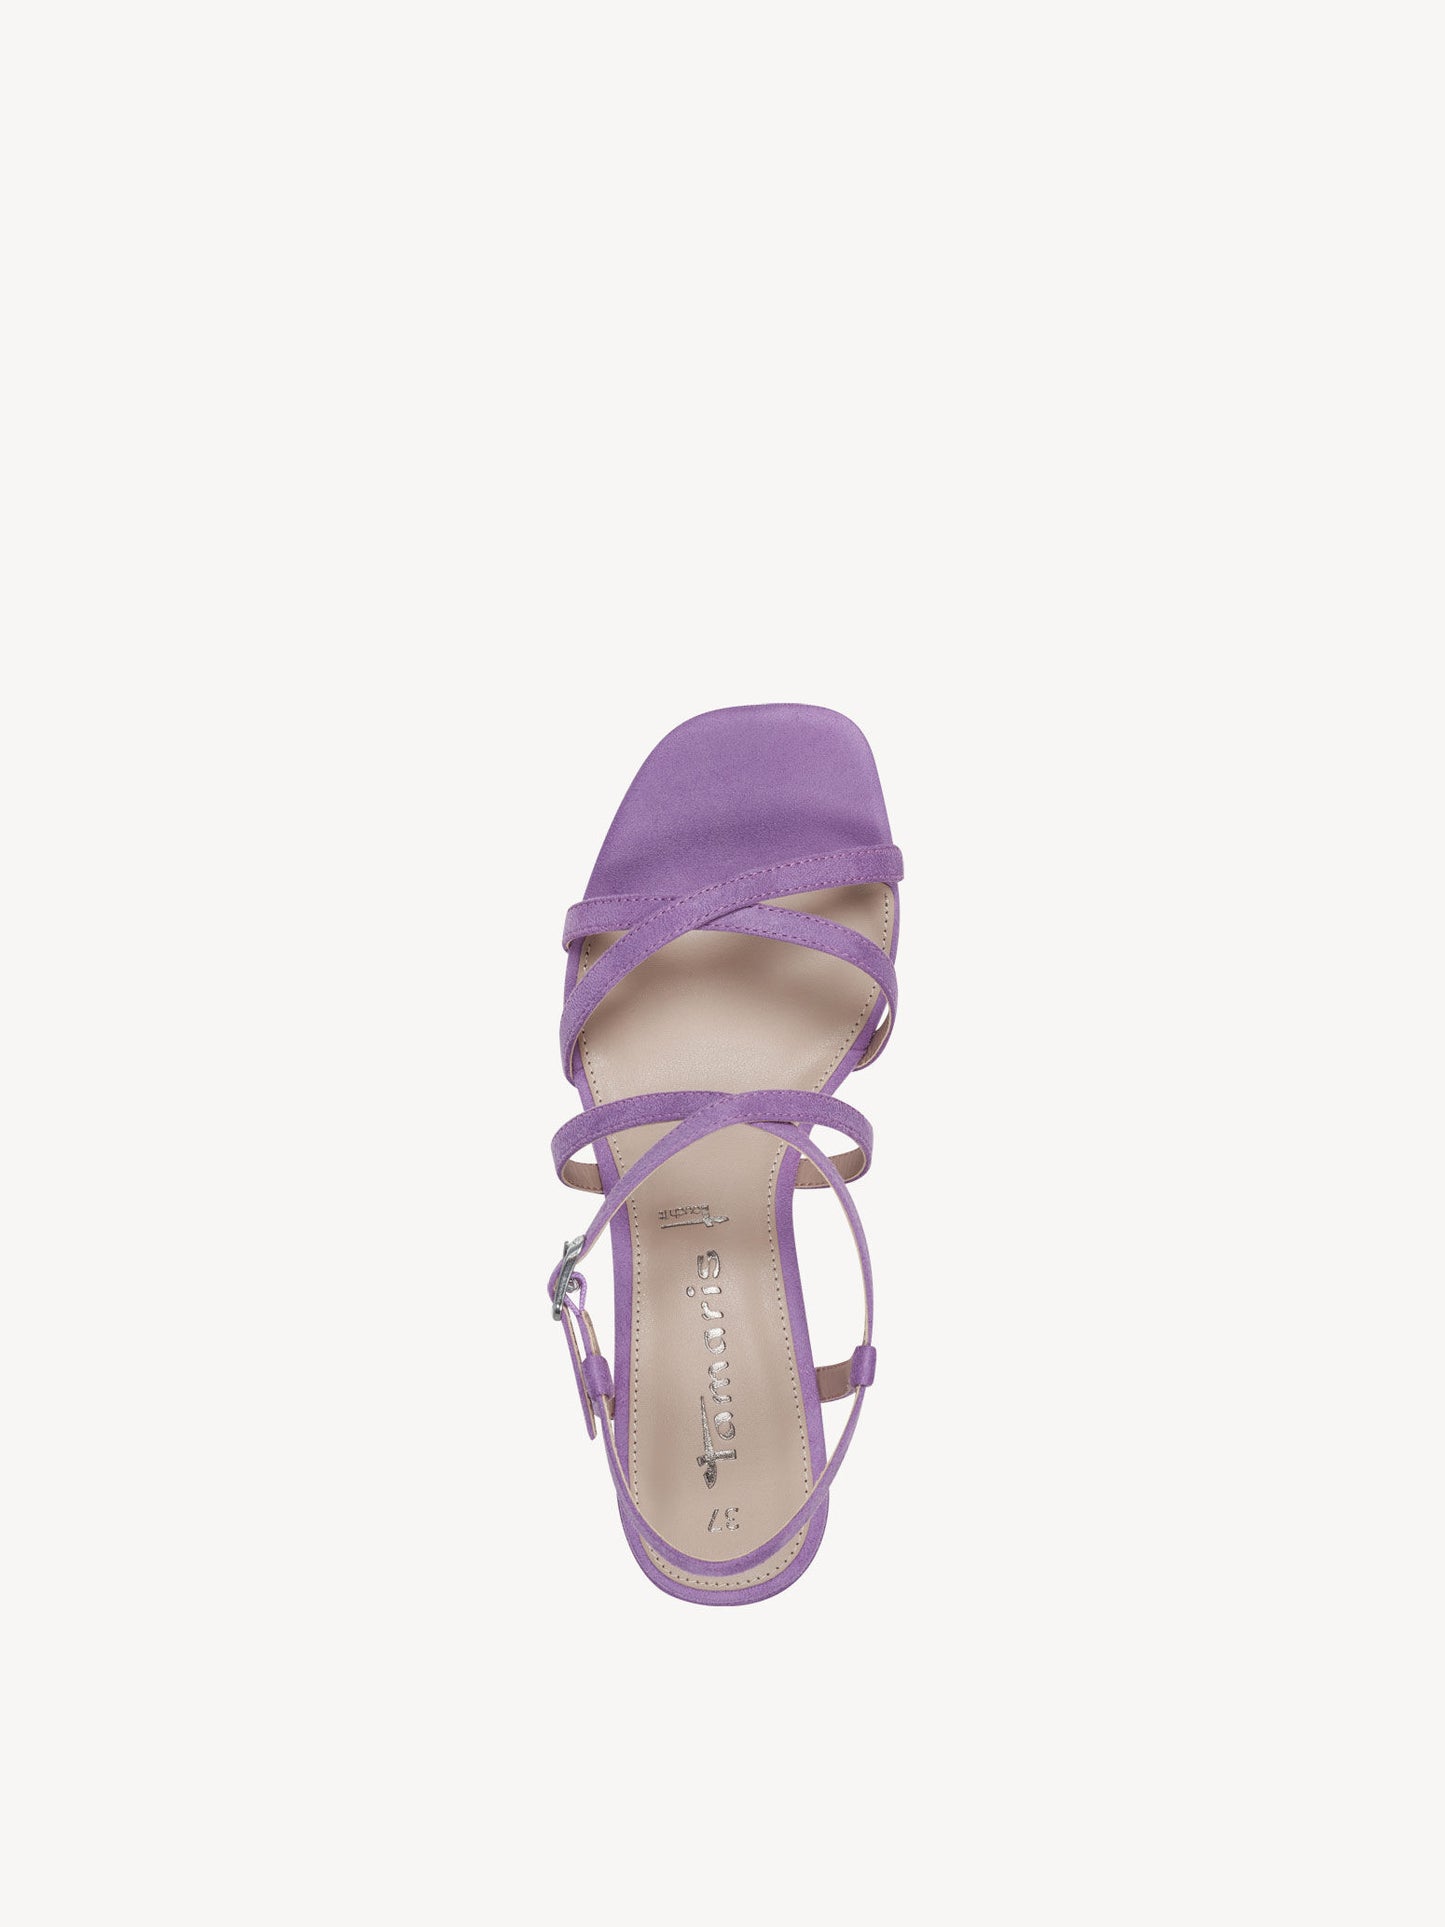 Tamaris Women's 1-28204-42 Heeled Leather Sandals Light Purple